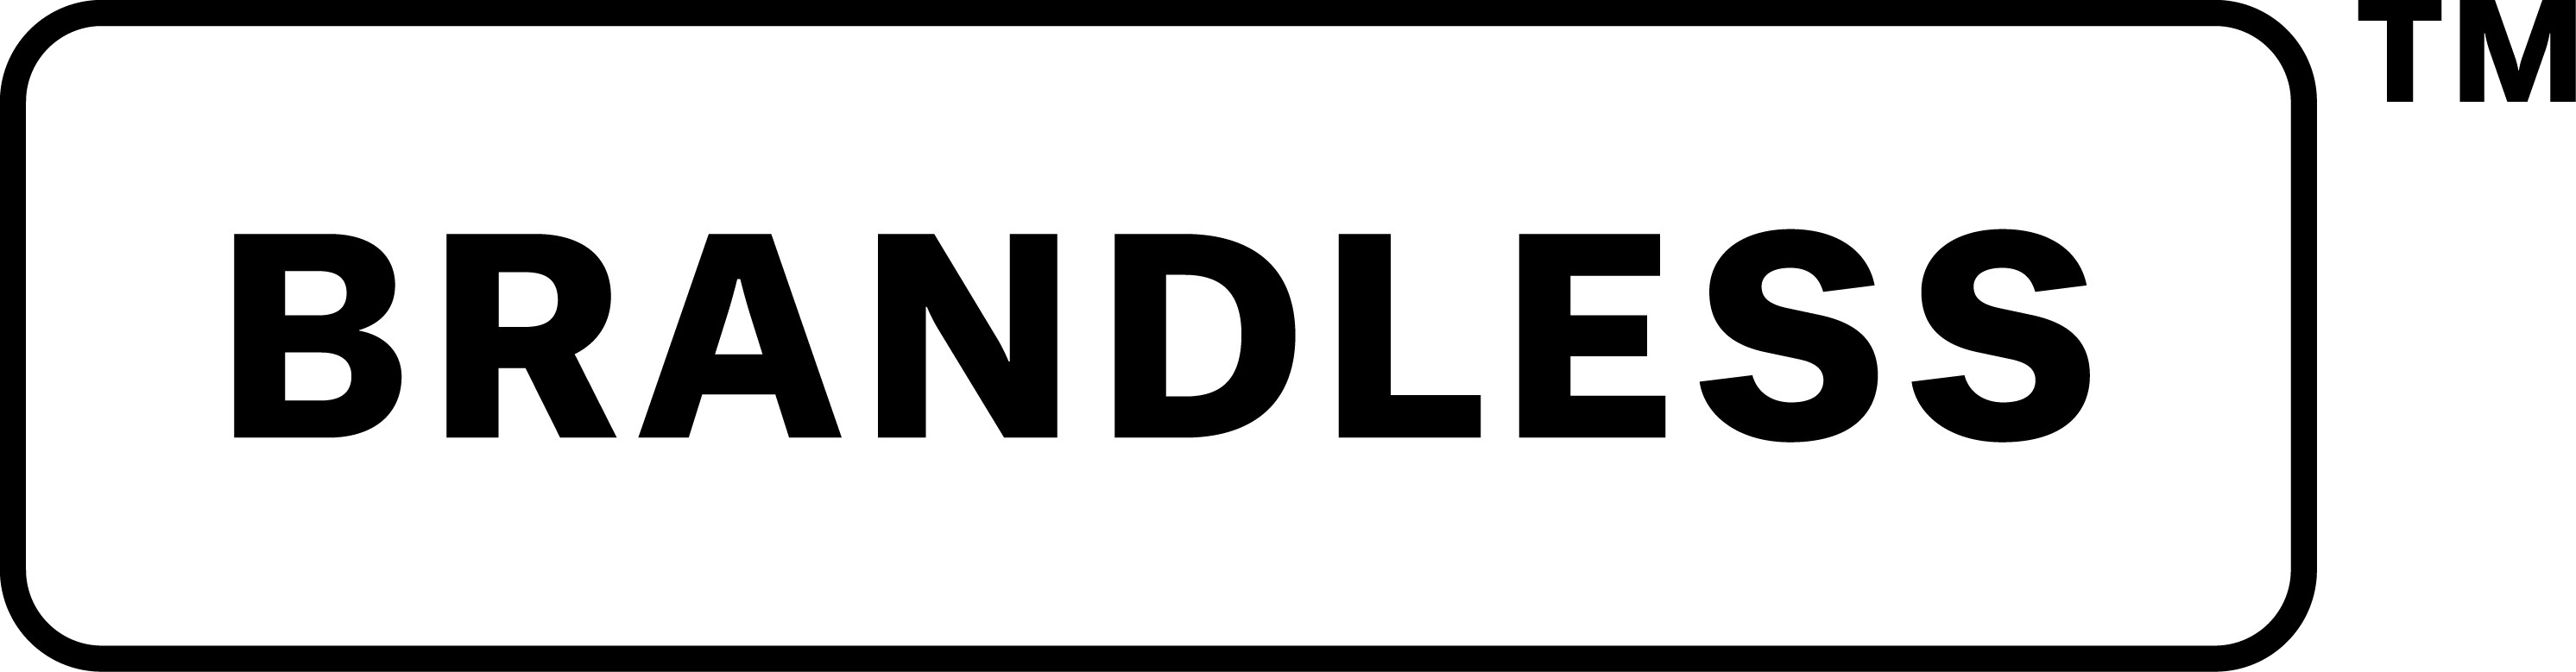 Brandless, Inc.